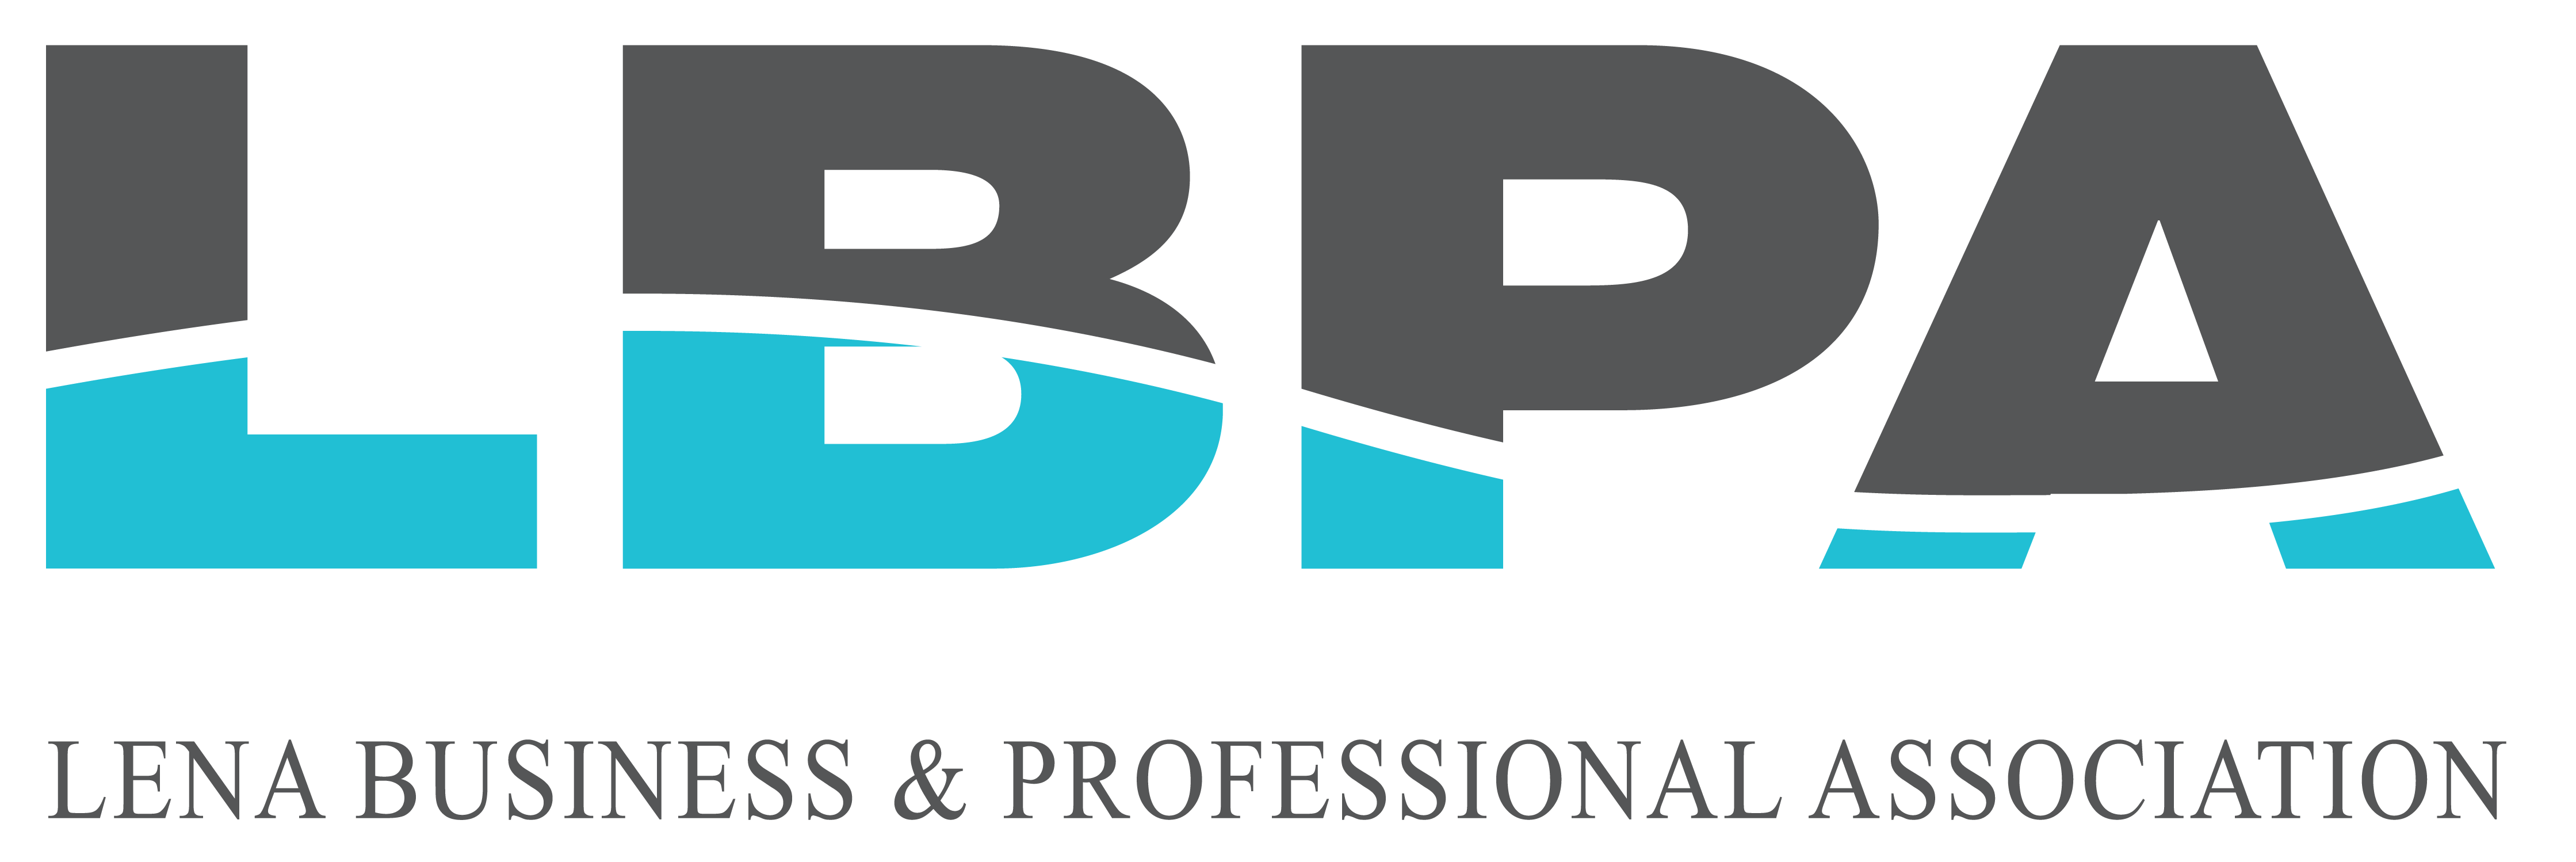 Lena Business and Professionals' Association logo